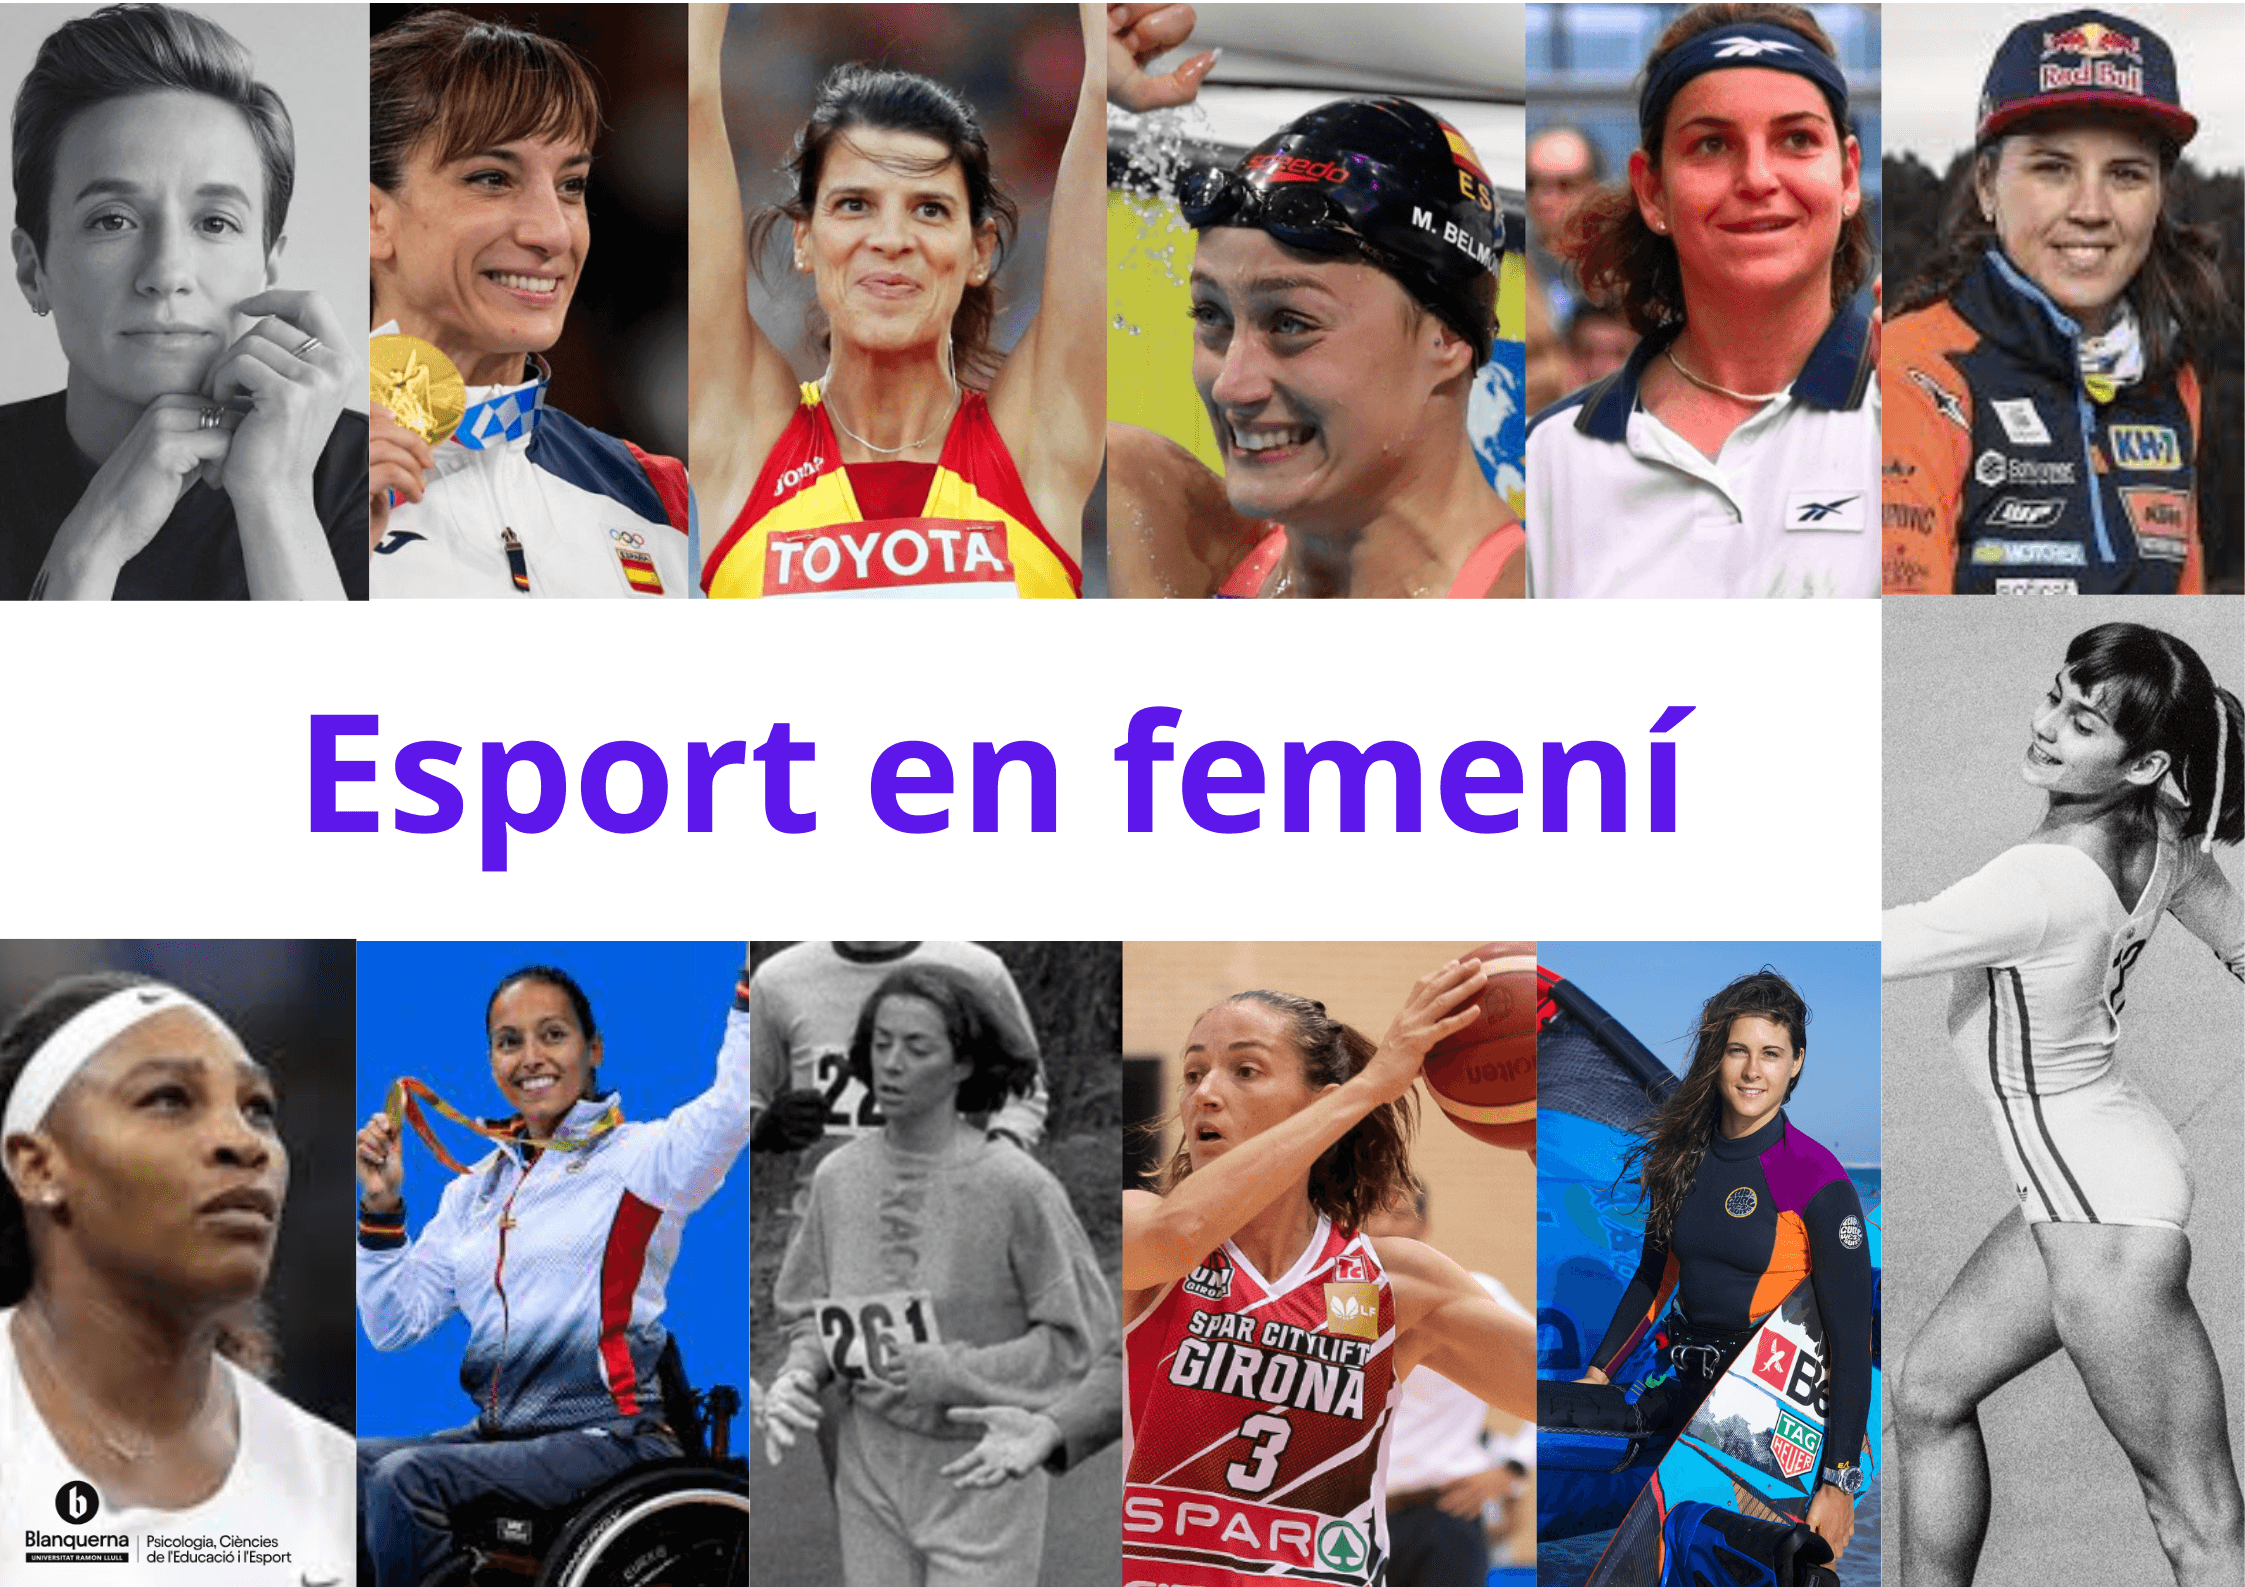 dones esportistes